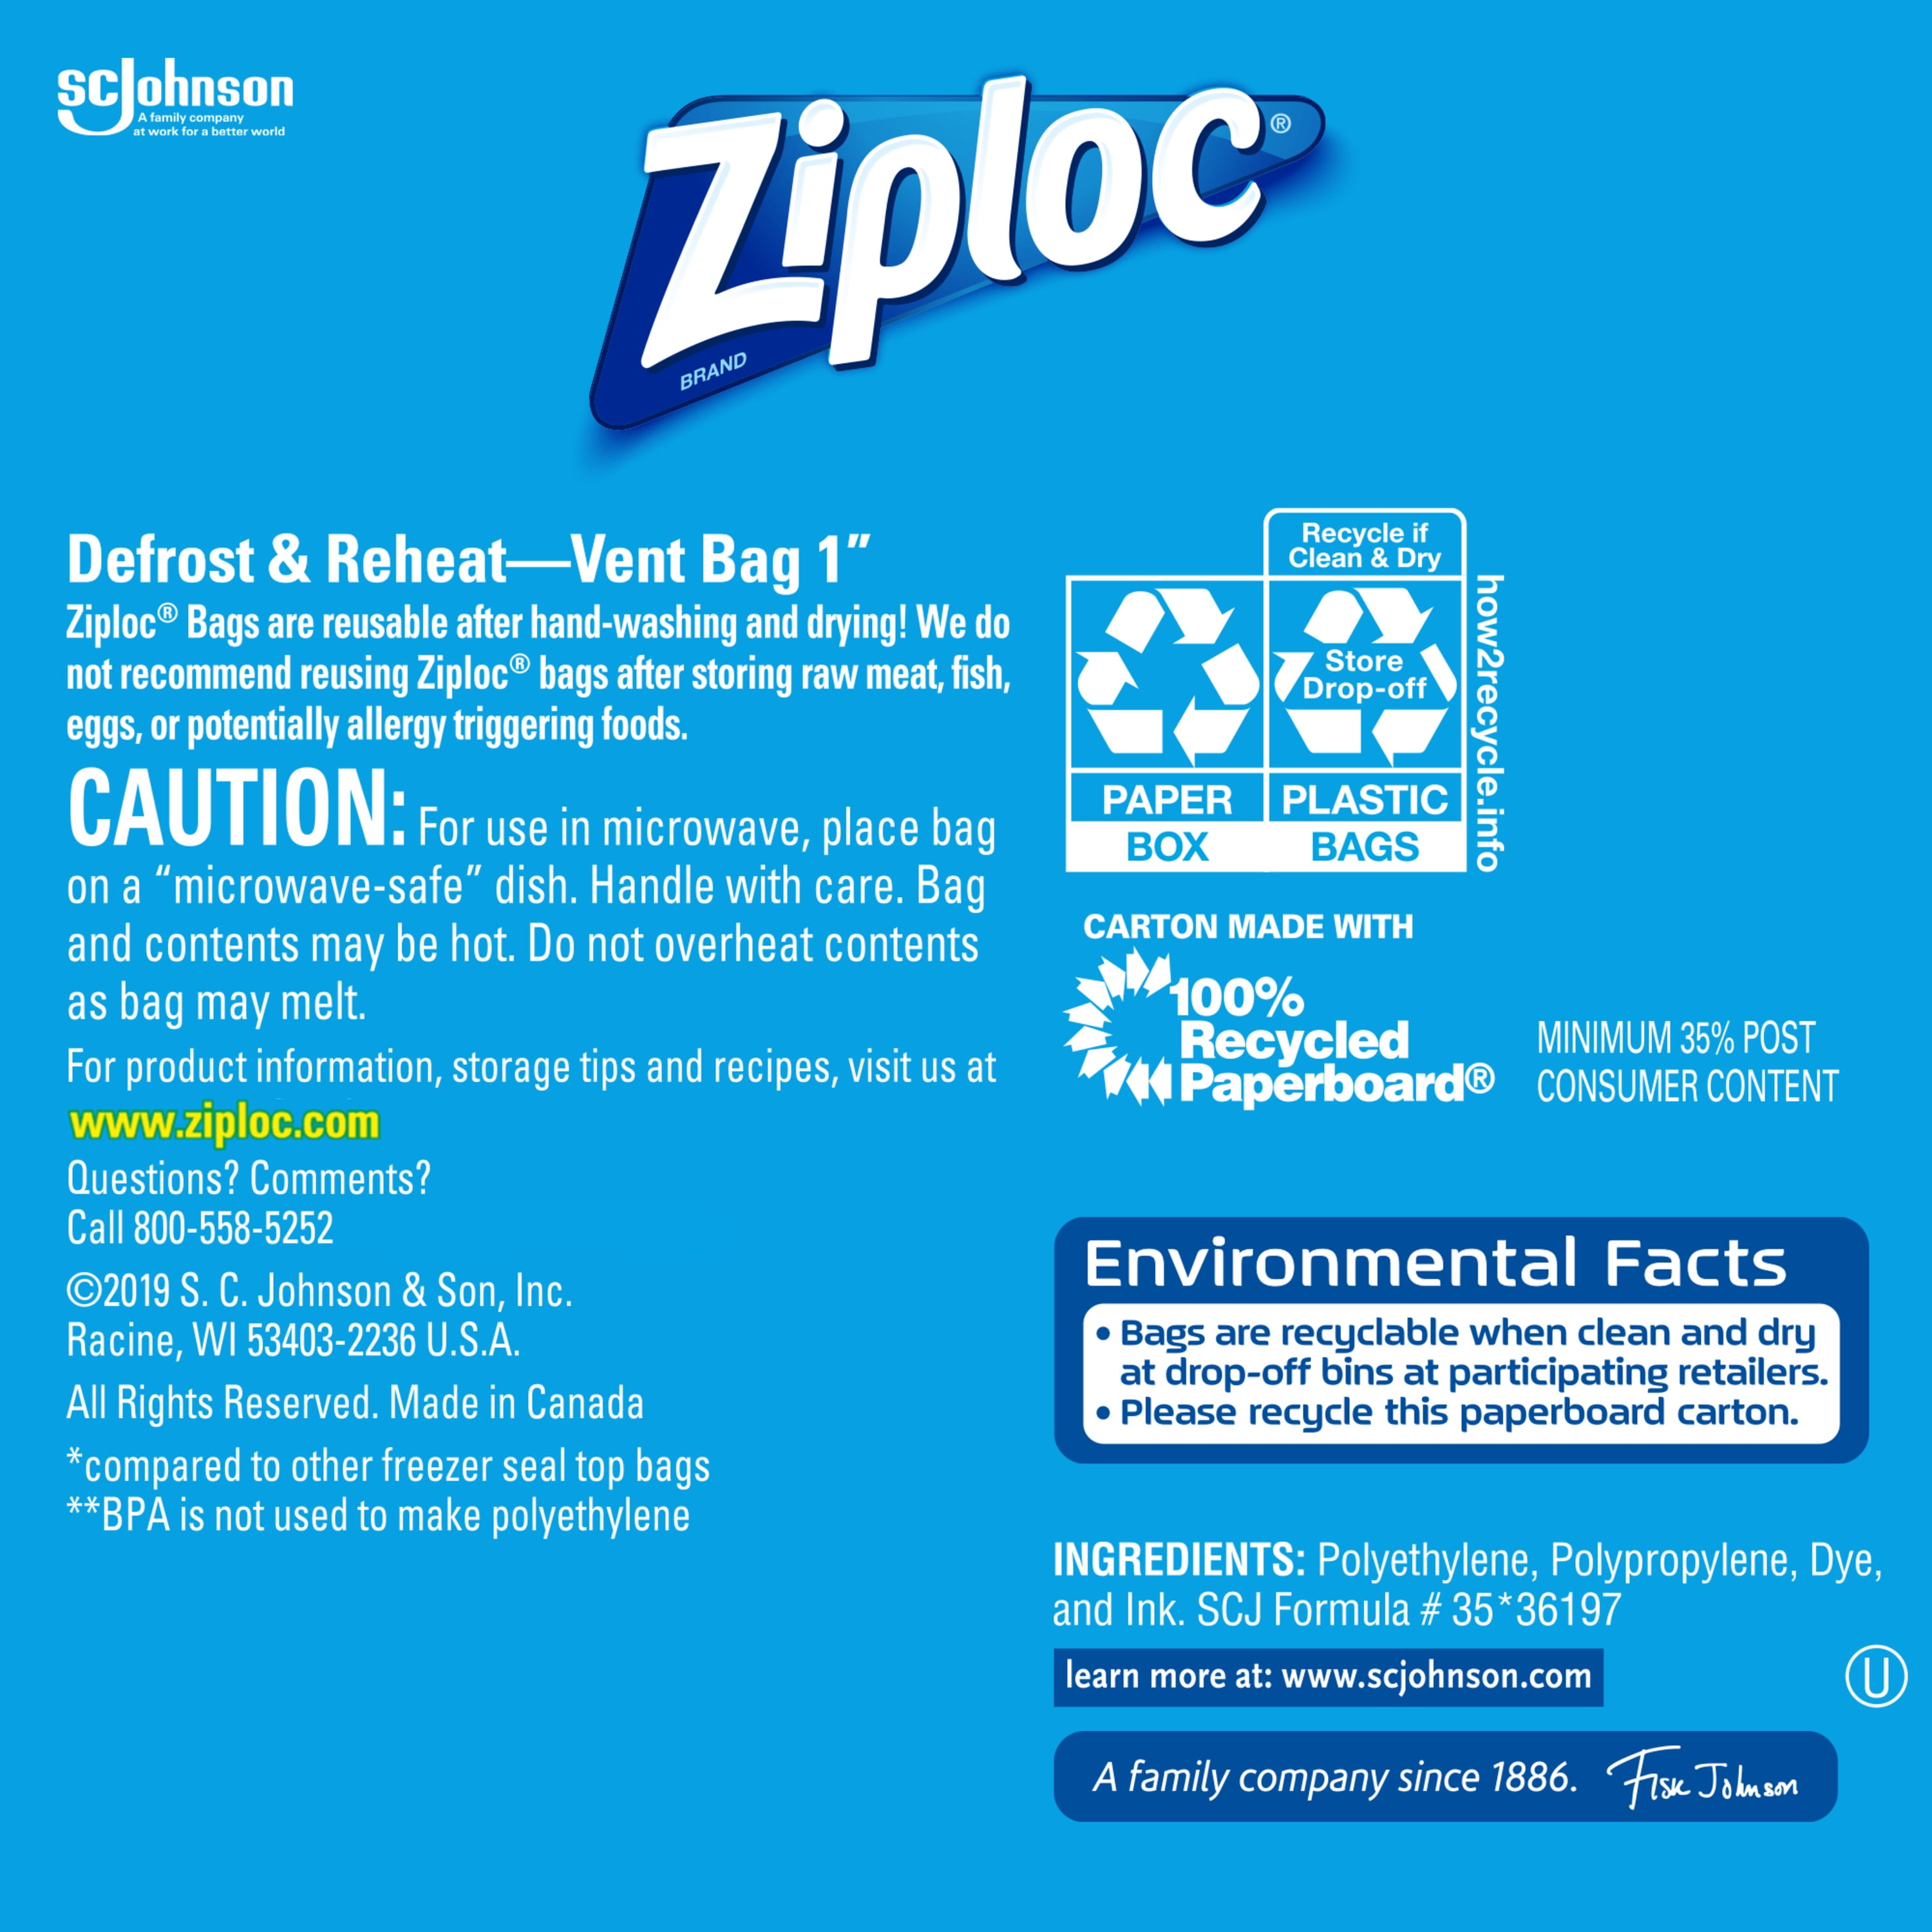 Ziploc Brand Freezer Bags with New Stay Open Design, Quart, 19